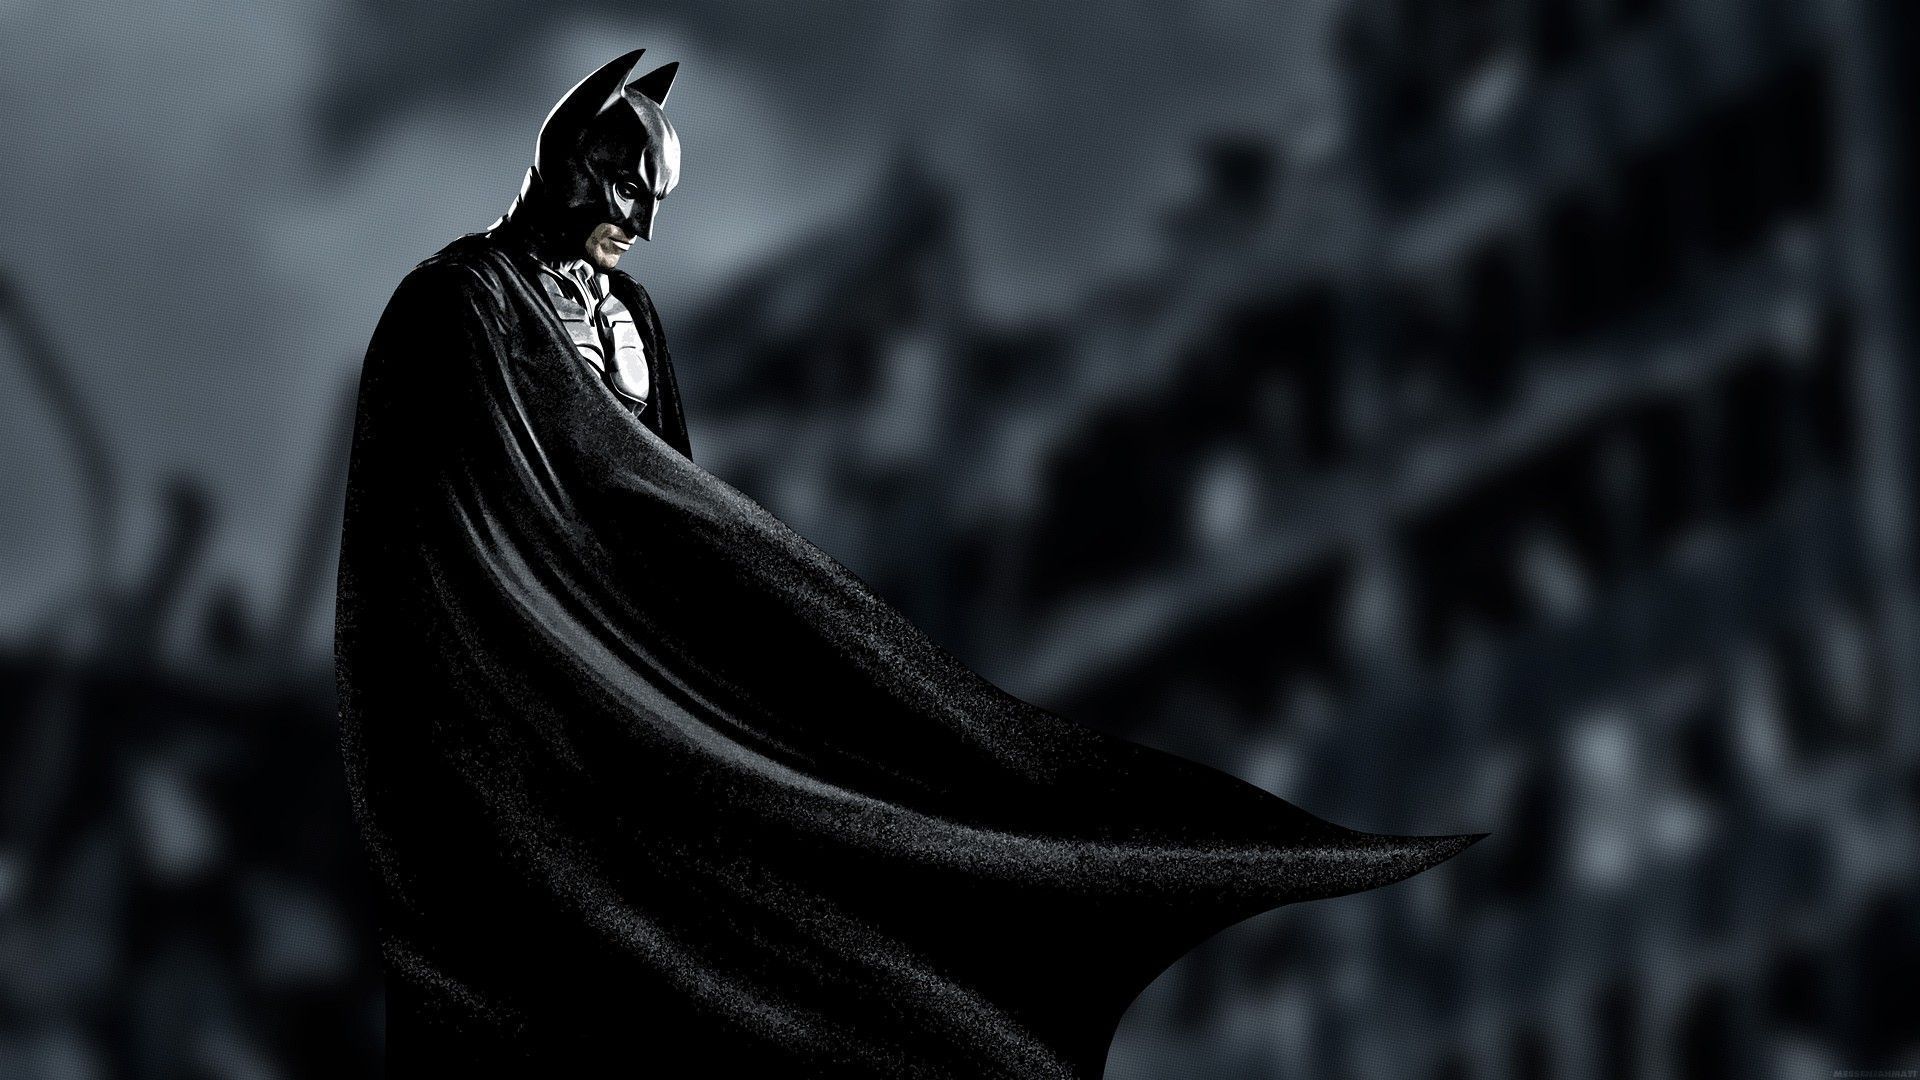 Batman Super Hero Wallpaper HD For Smartphone 20216 Full HD ...